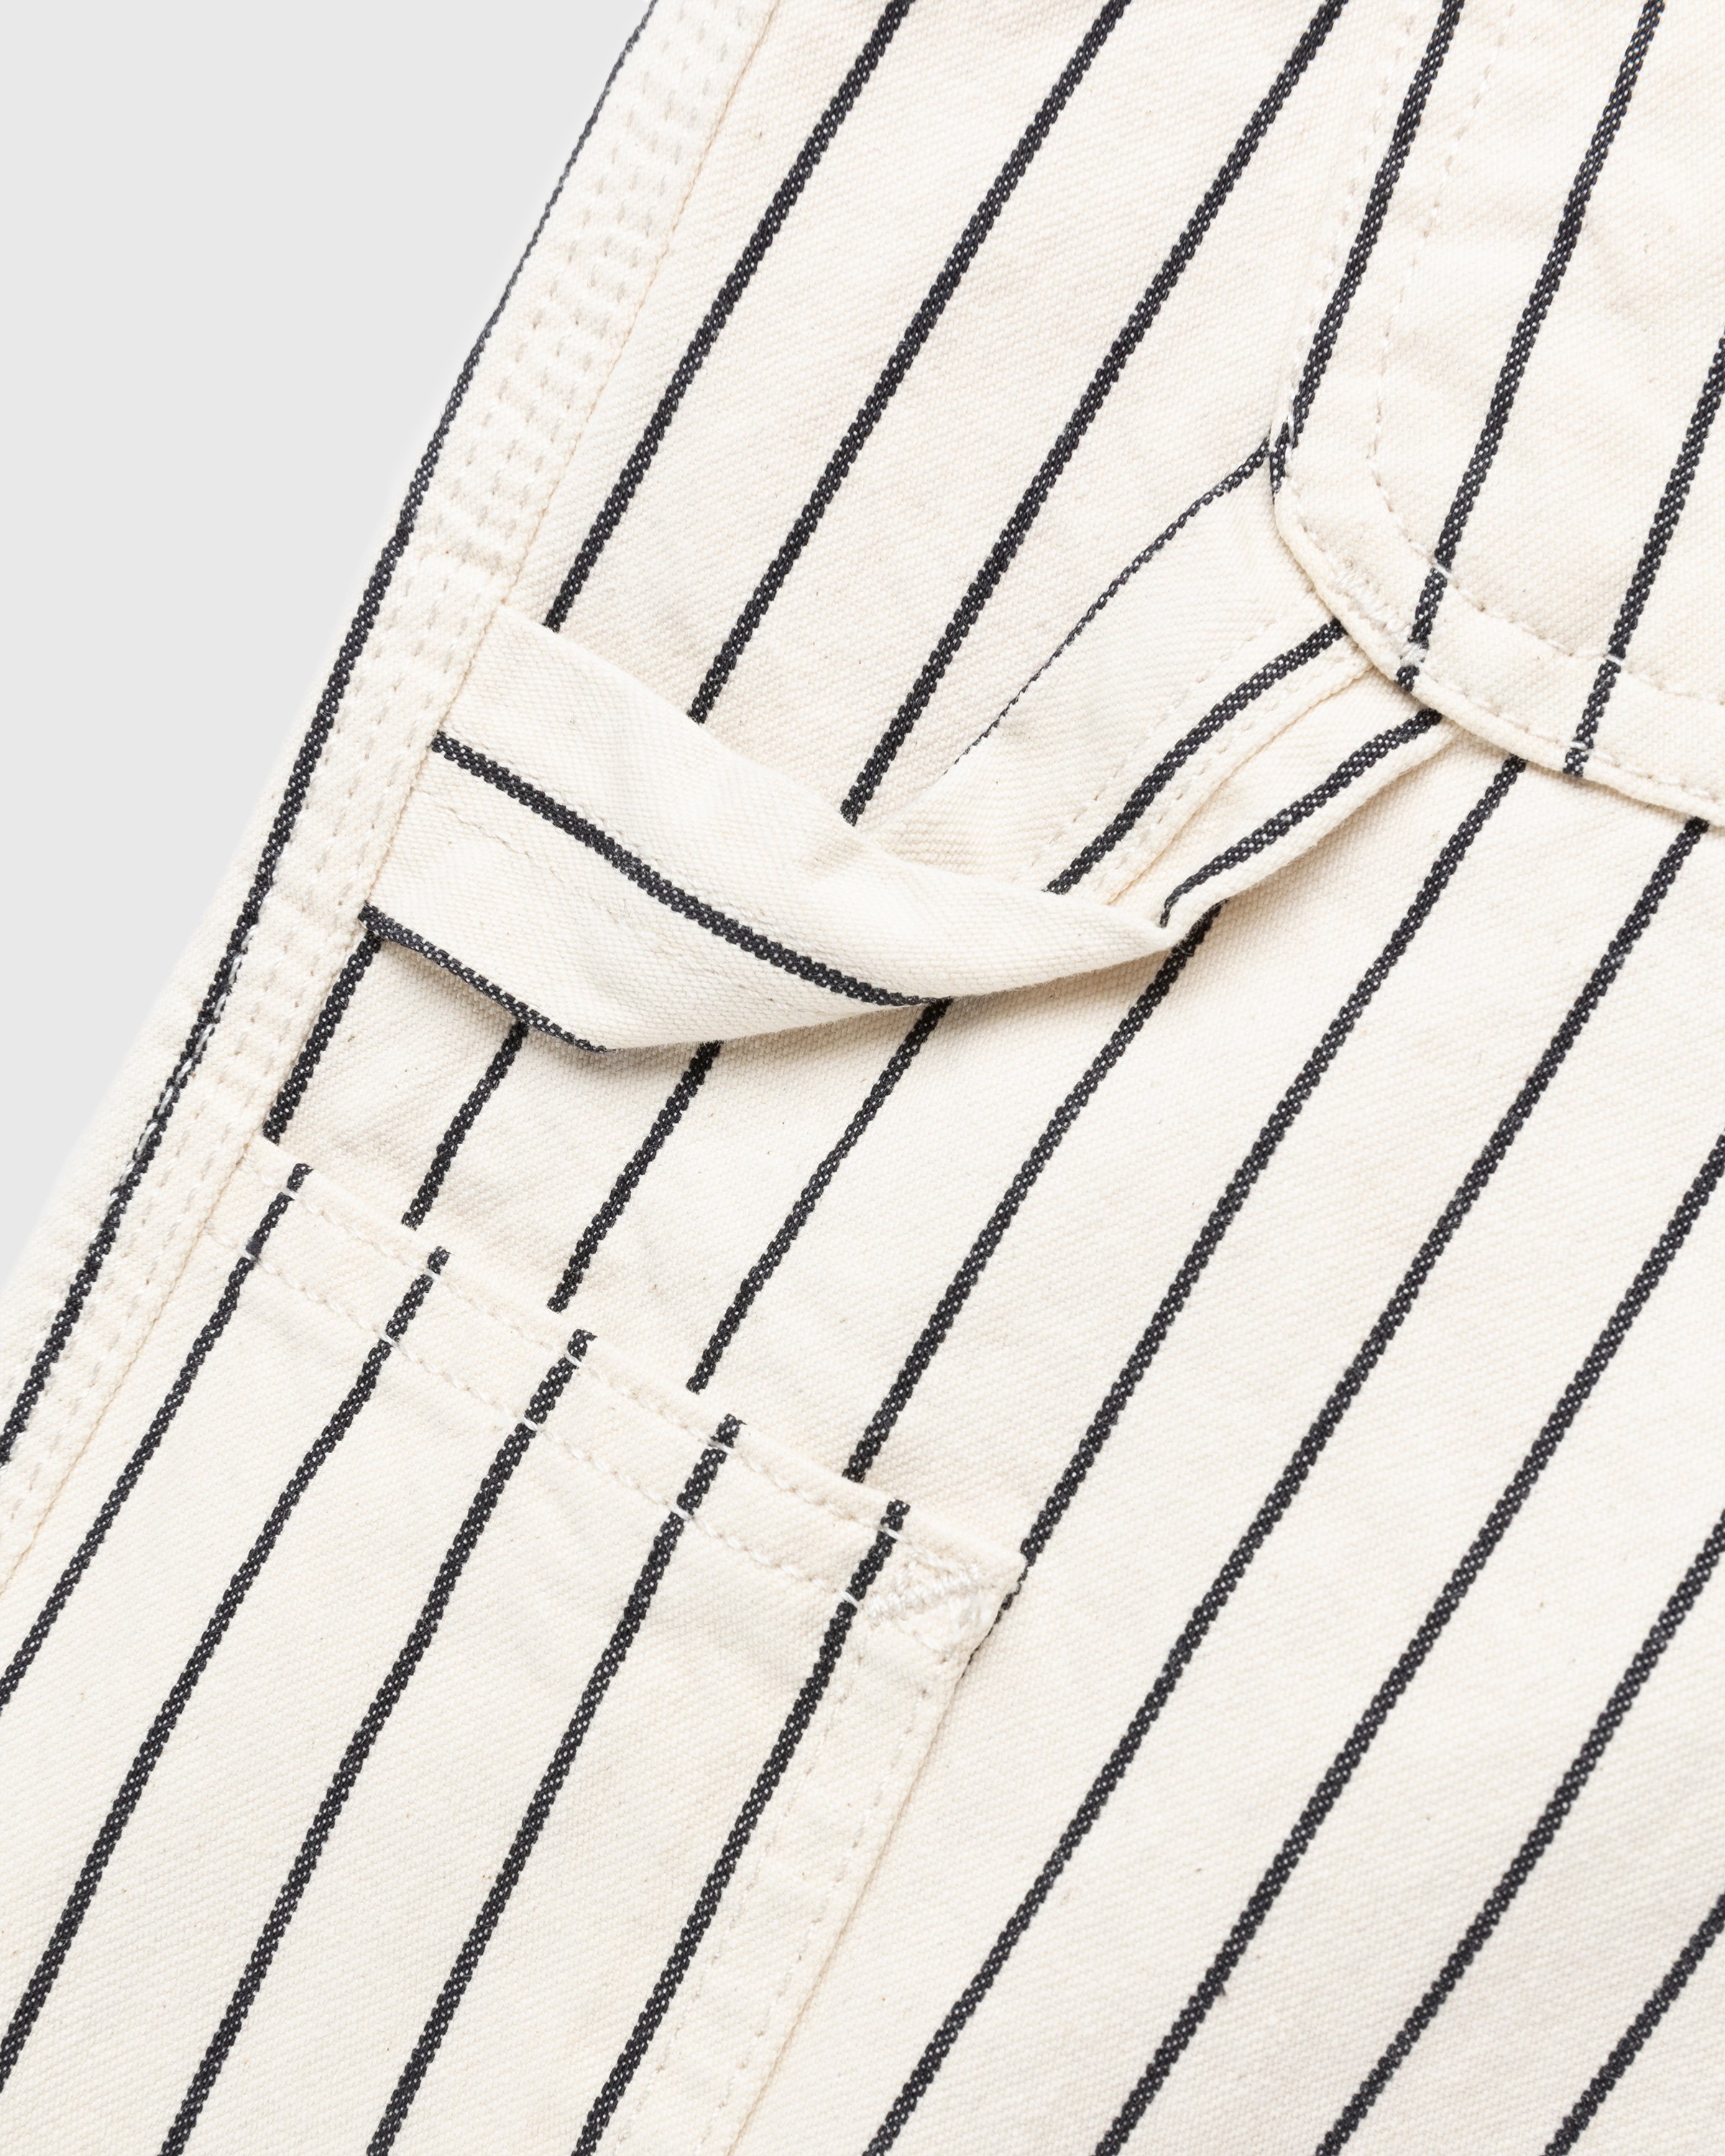 Carhartt WIP - Trade Single Knee Pant Wax/Black Rinsed - Clothing - White - Image 3